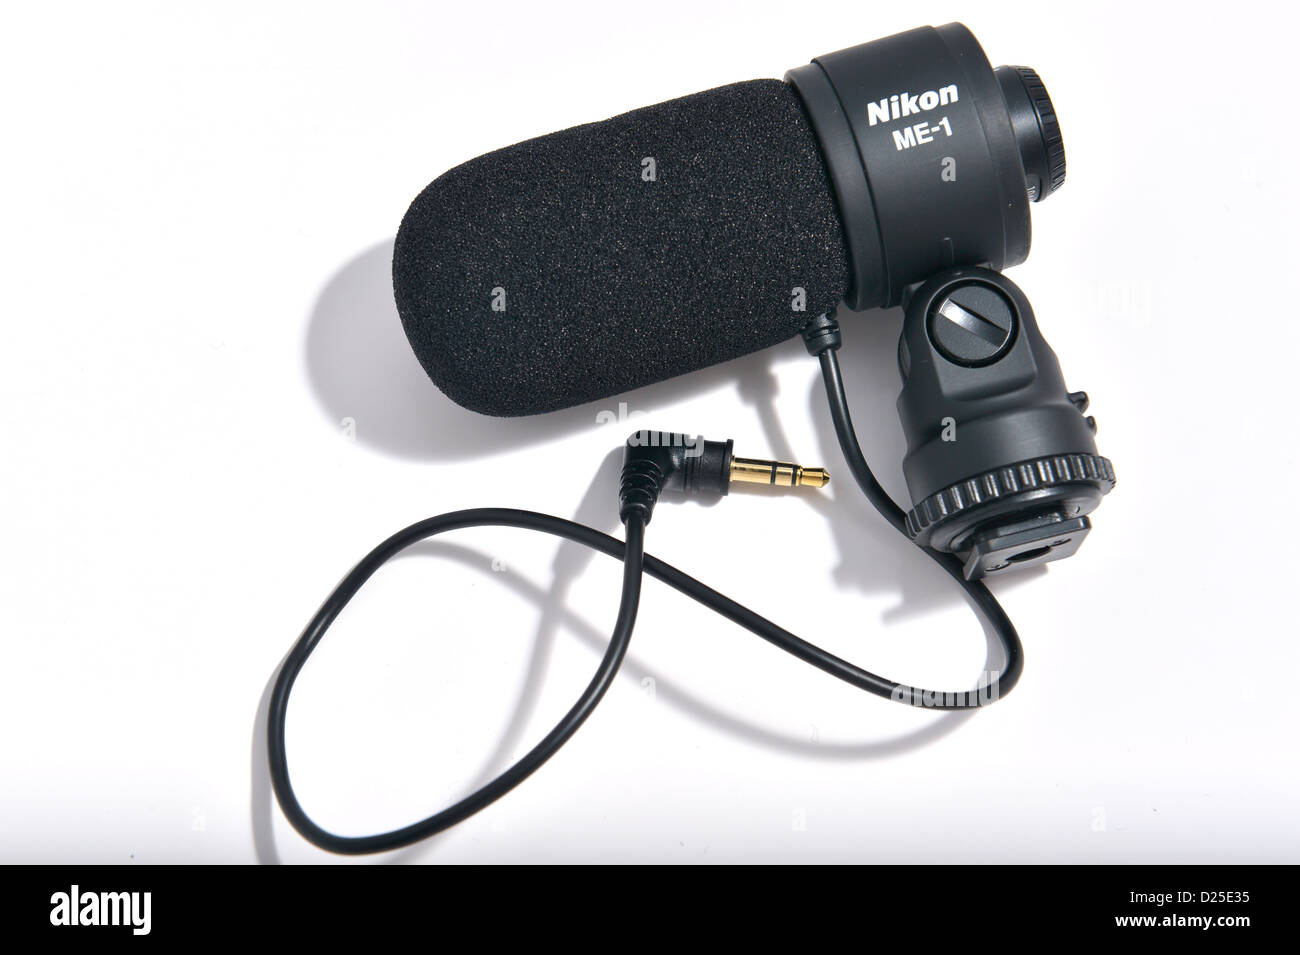 ME Nikon-1 micrófono estéreo Fotografía de stock - Alamy